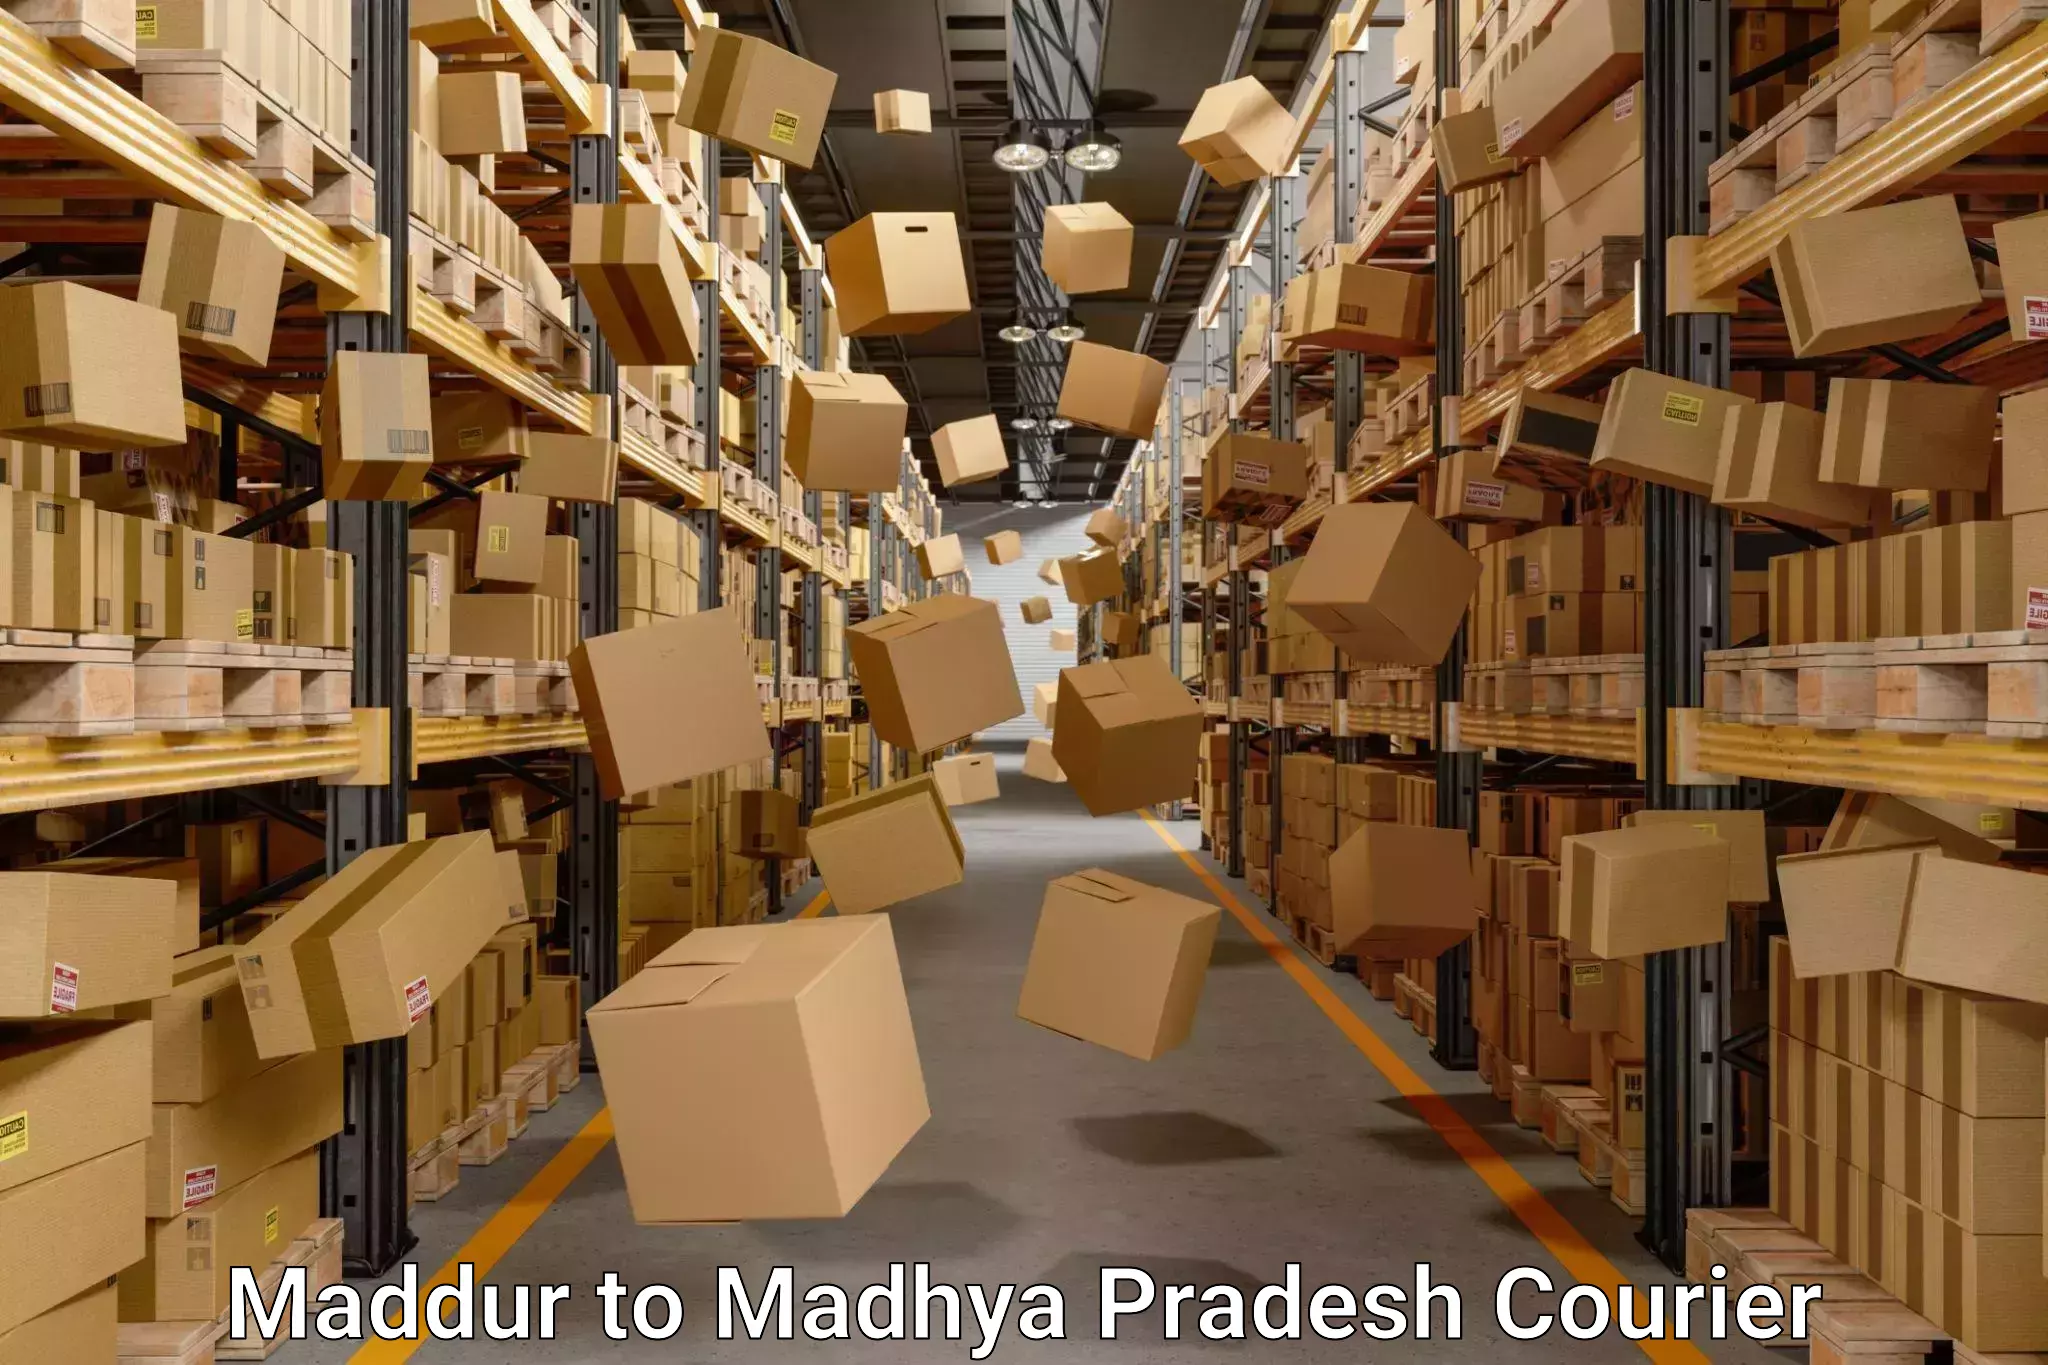 Professional moving company Maddur to Vidisha